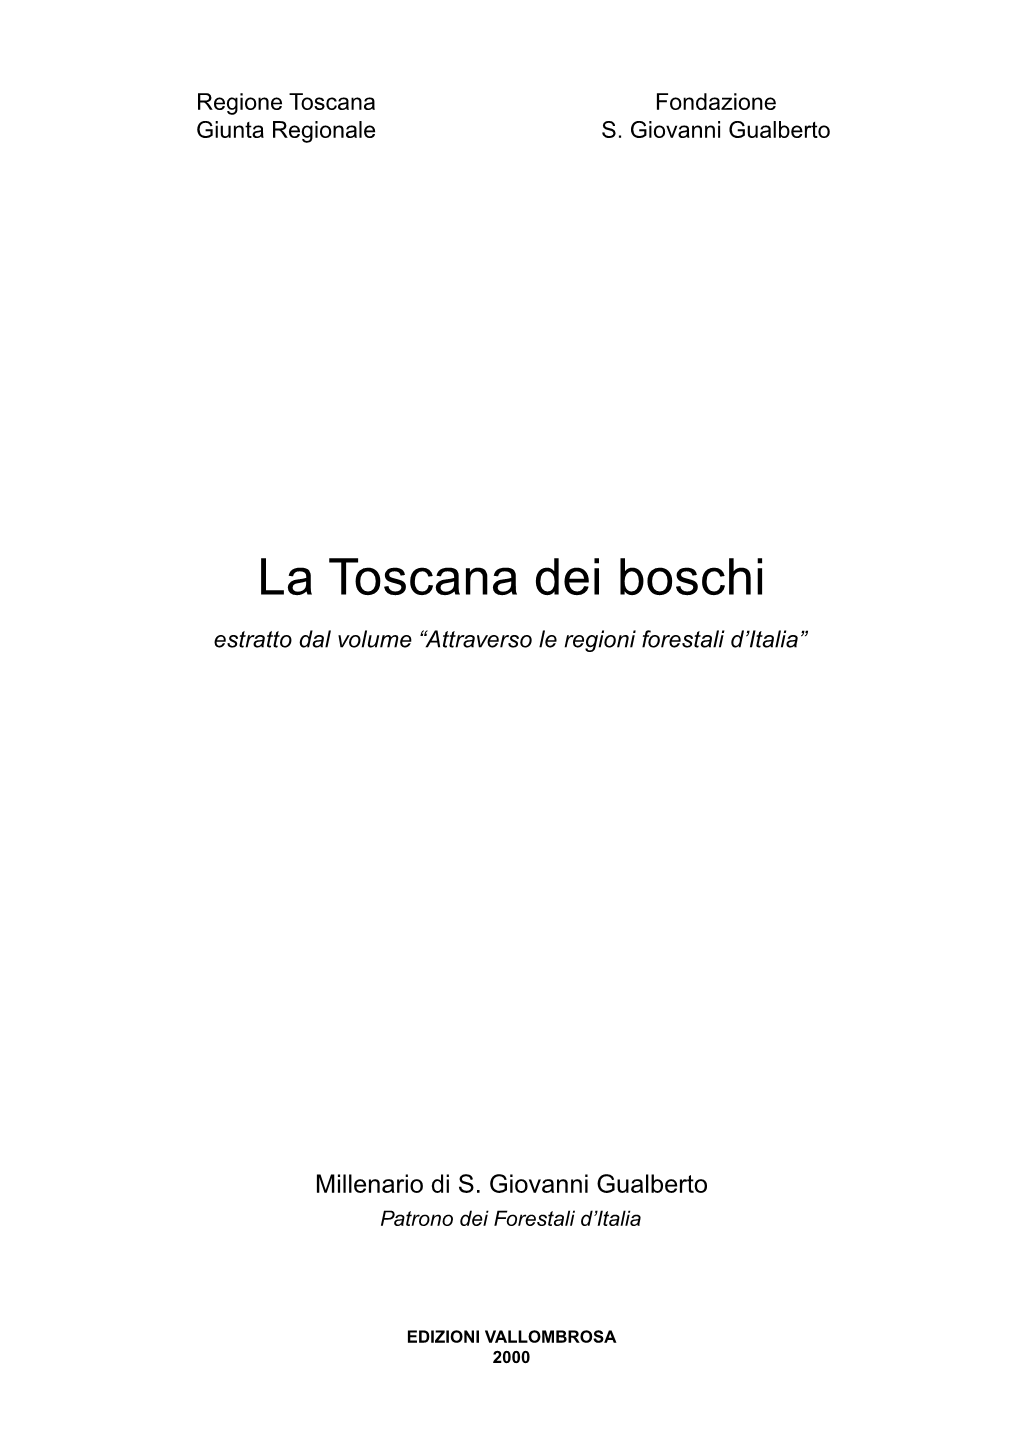 La Toscana Dei Boschi